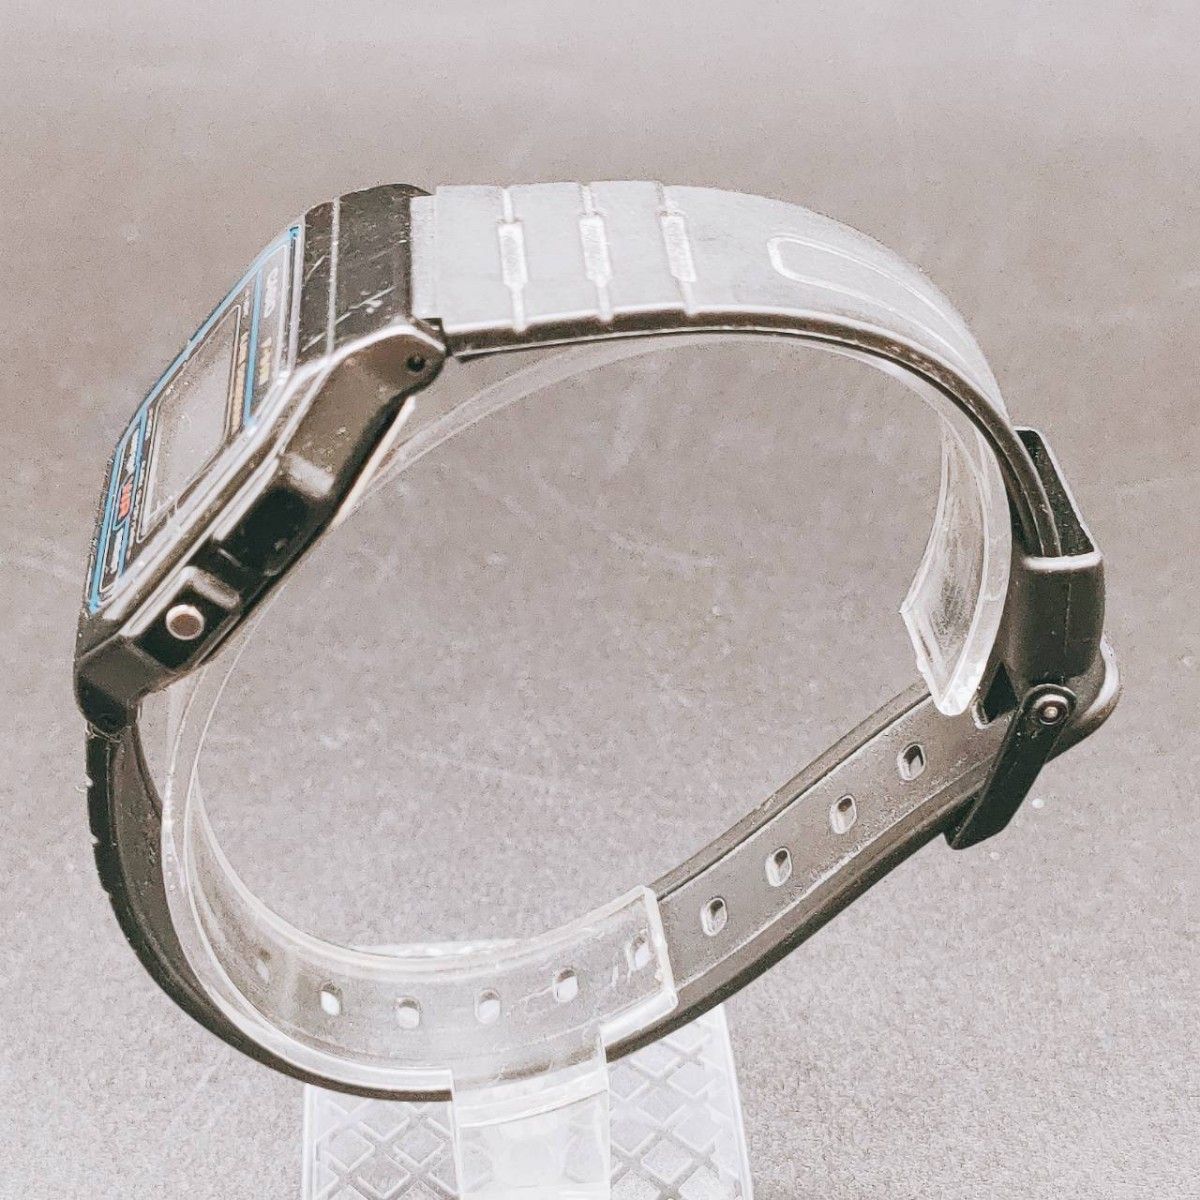 CASIO カシオ 593 F-91W 腕時計 デジタル 黒文字盤 シルバー色 レディース 時計 とけい トケイ アクセ 